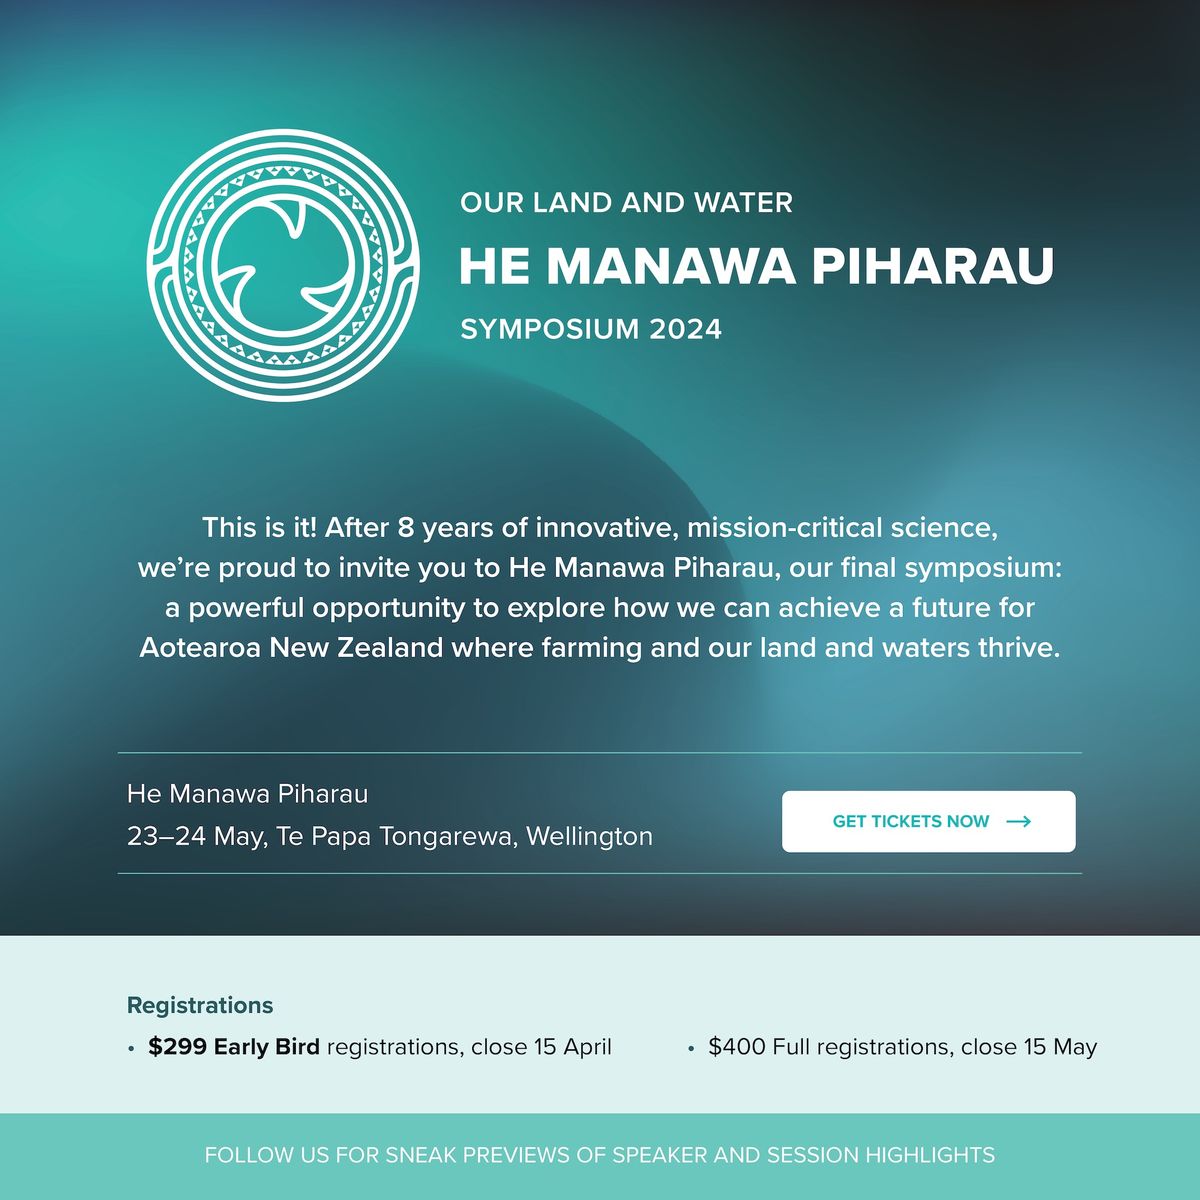 He Manawa Piharau, Our Land and Water Symposium